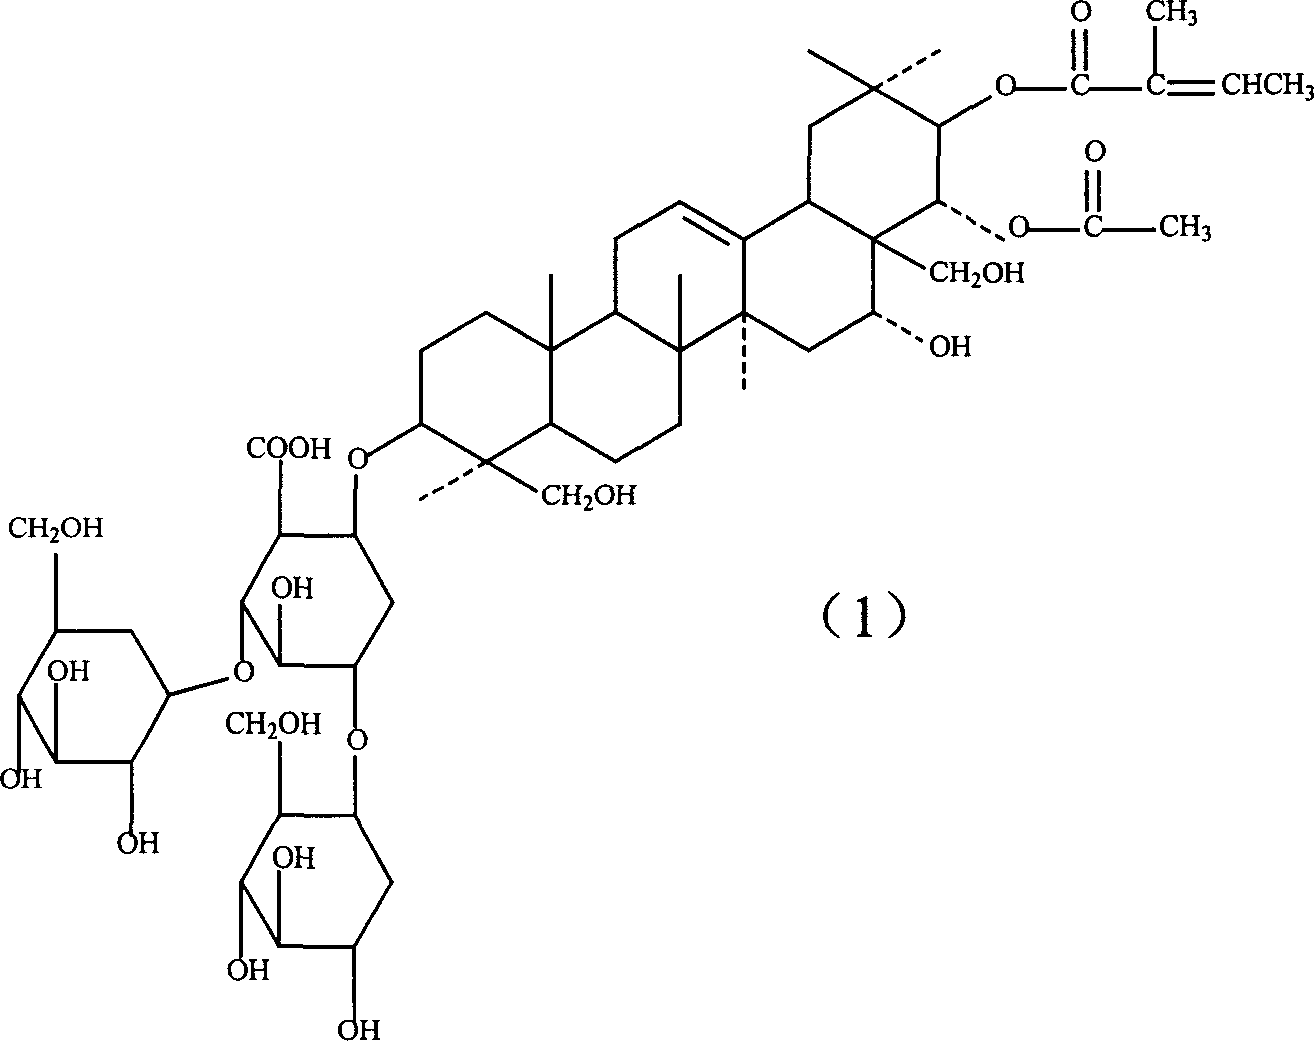 Lysine aescin saponin, its preparation and use